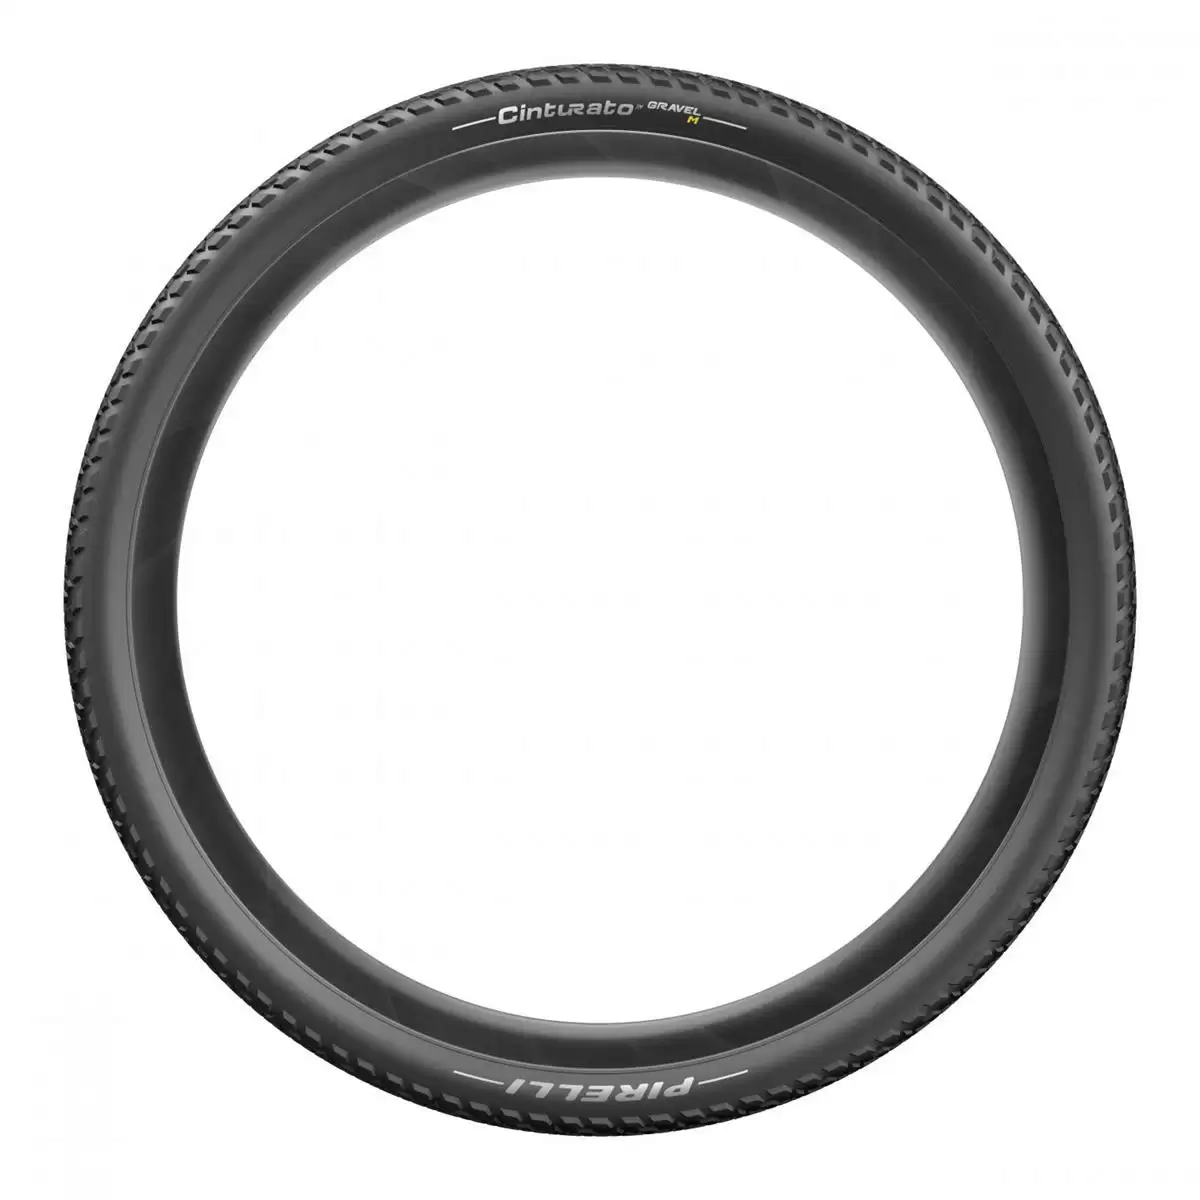 Neumático Cinturato Gravel Mixed Terrain 700x45c Tubeless Ready Negro #3